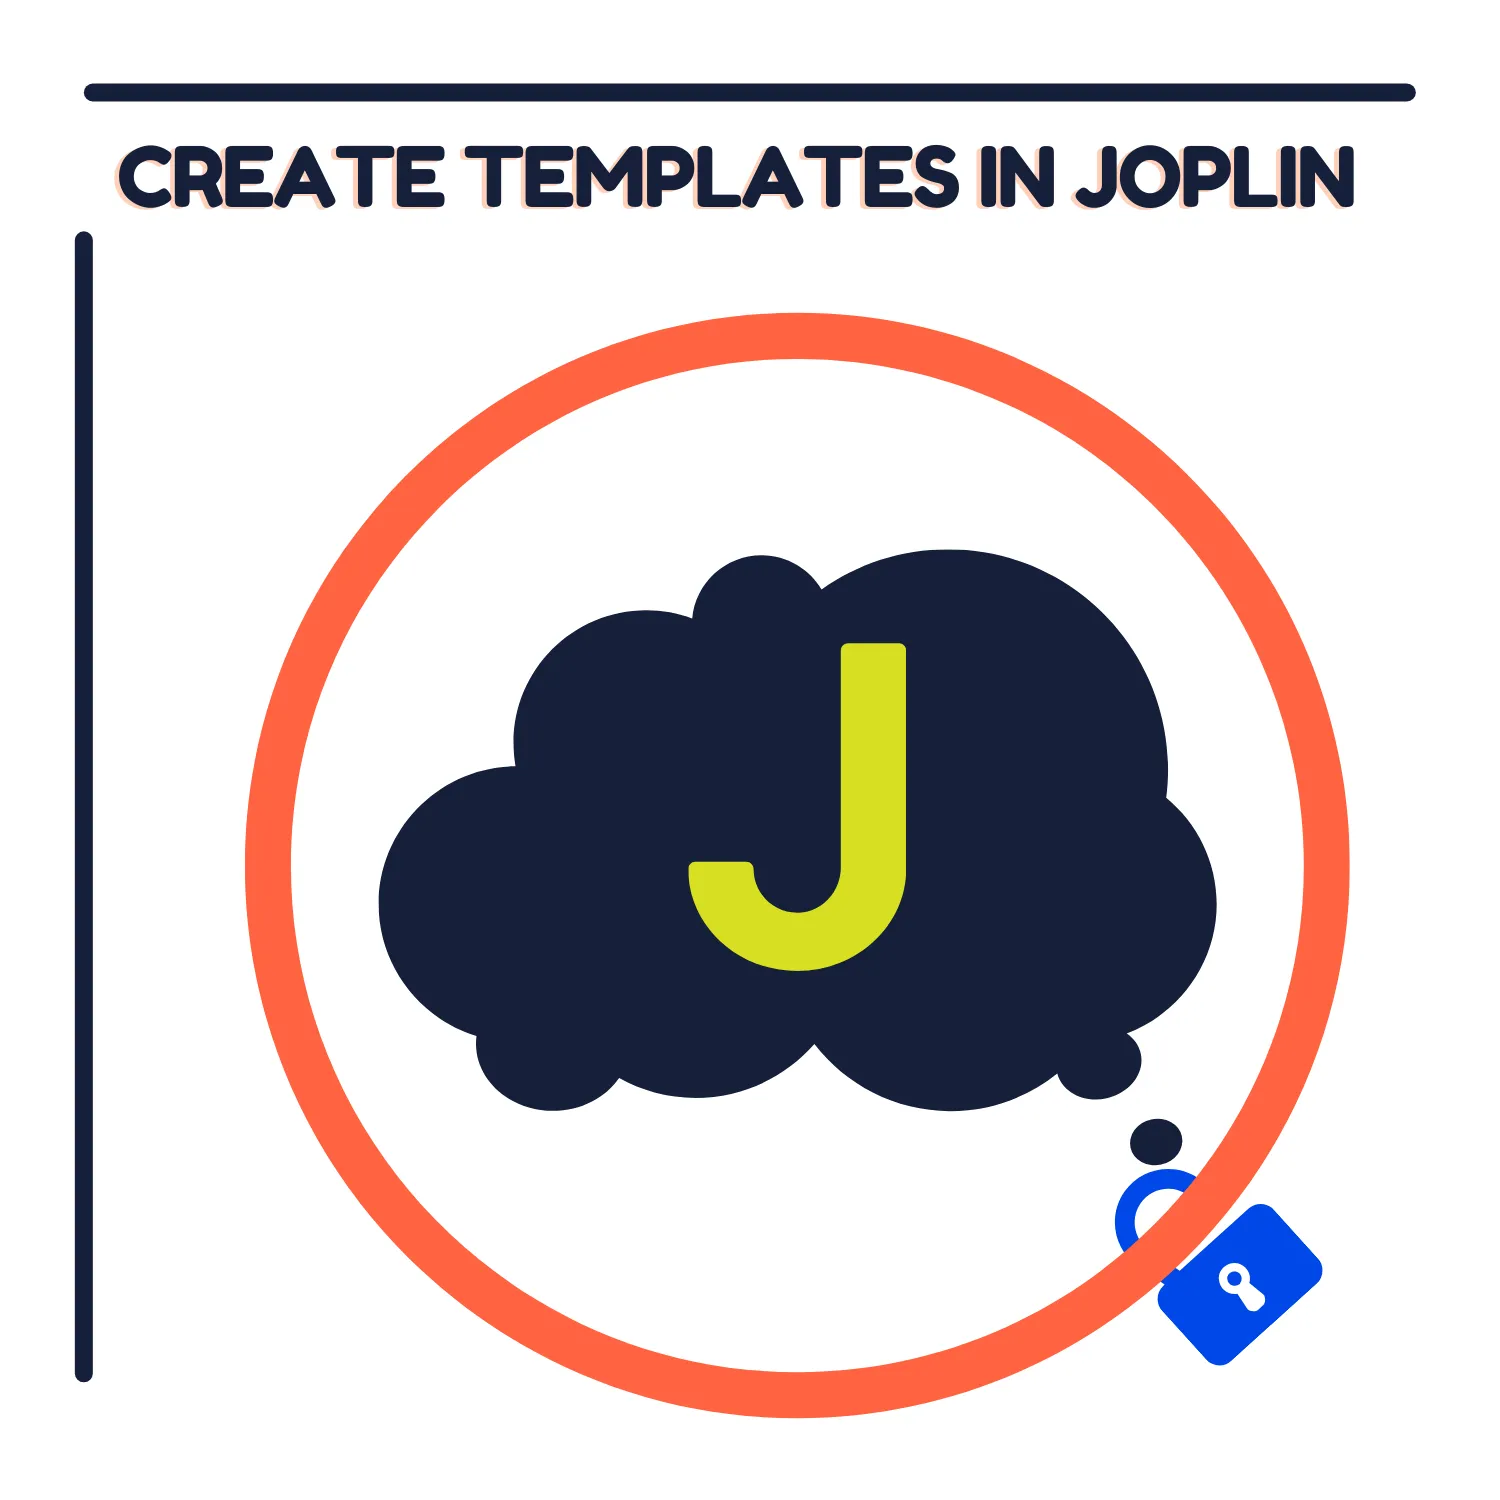 How to Create Templates in Joplin